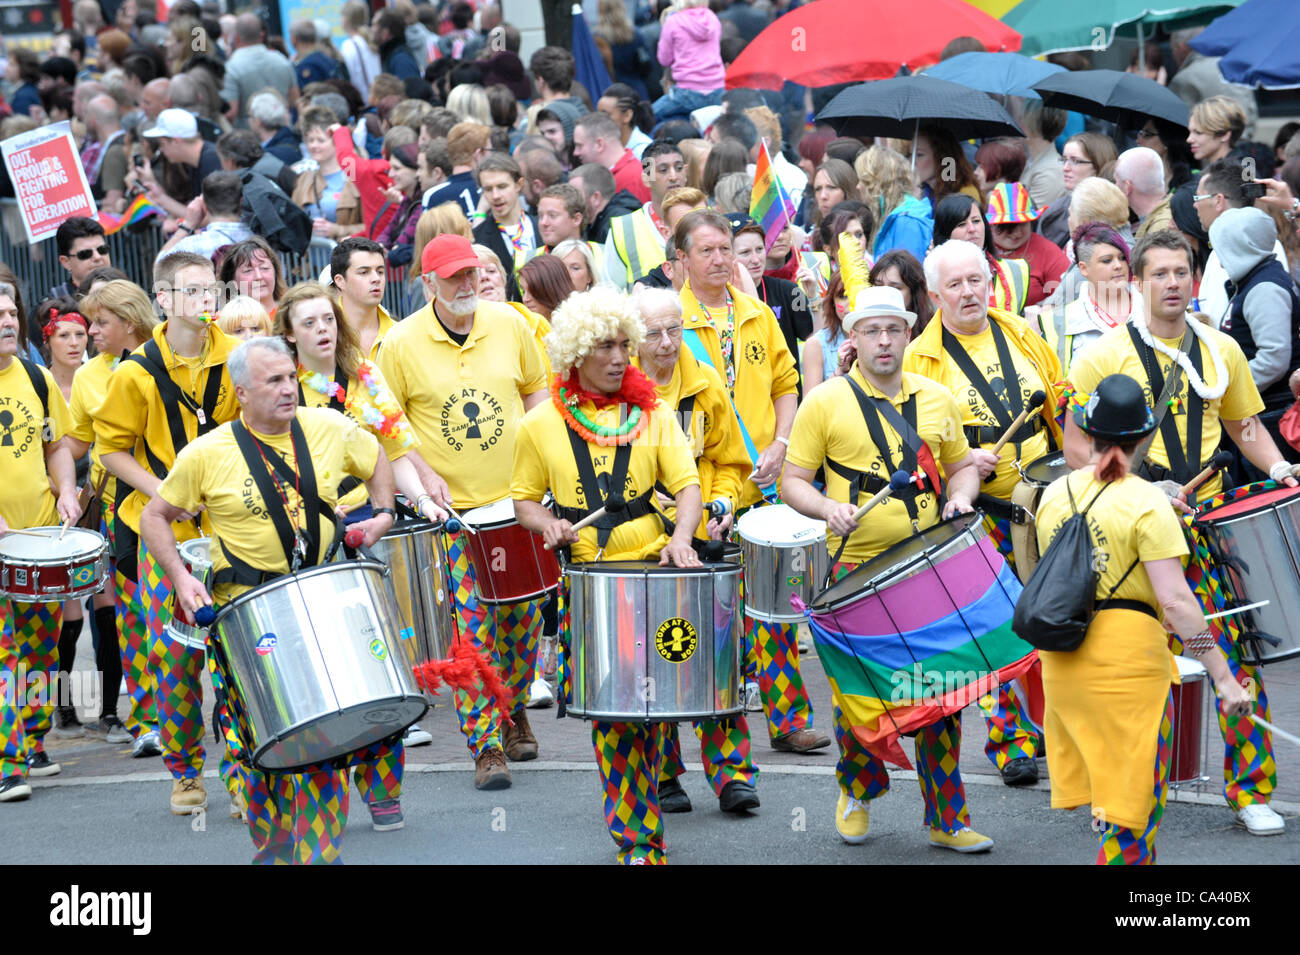 marching bands samba meaning